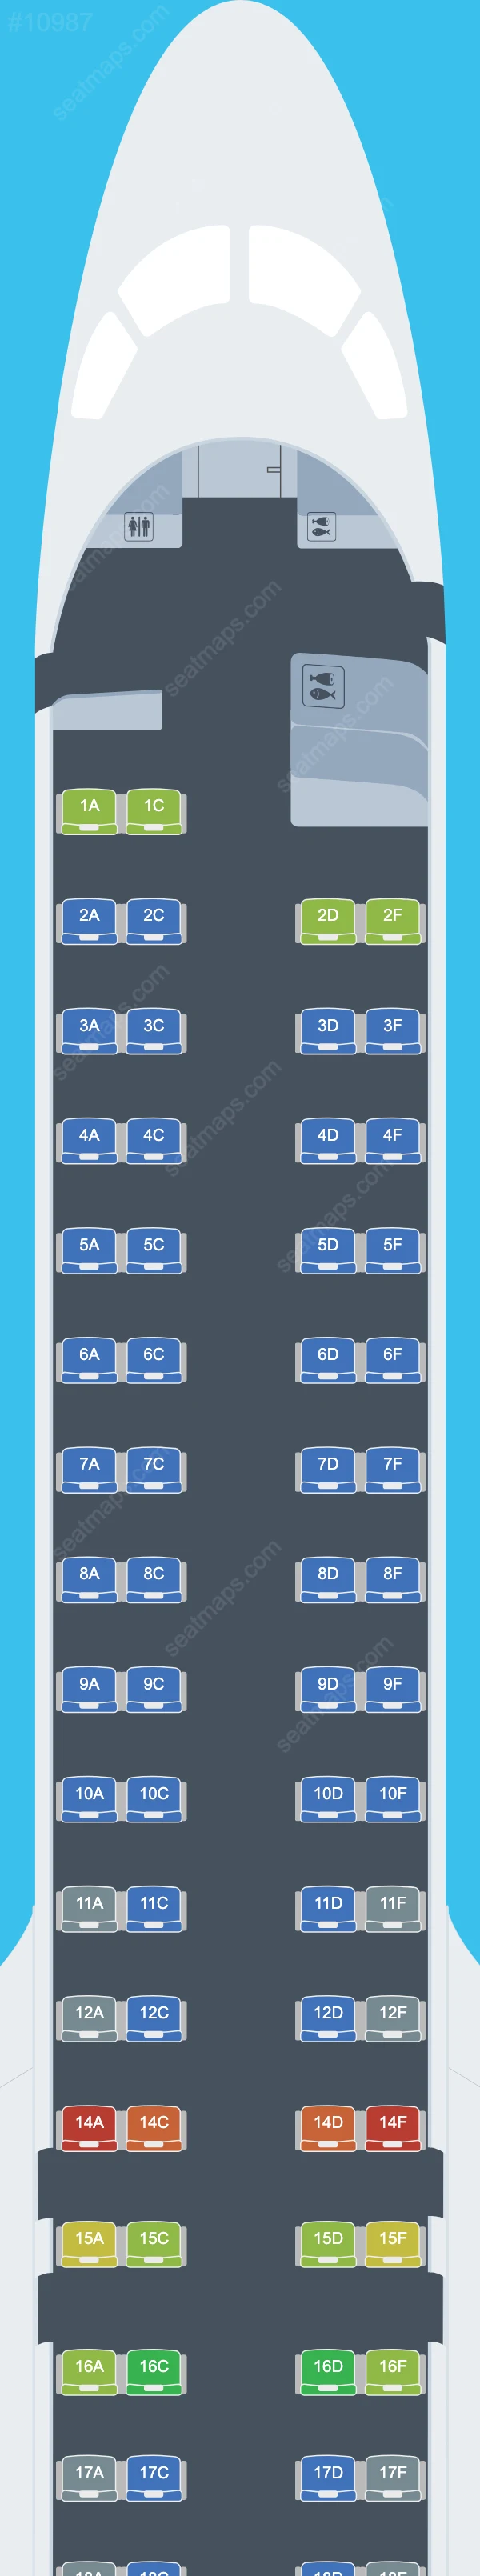 Swiss Embraer E195-E2 Seat Maps E195 E2 V.1